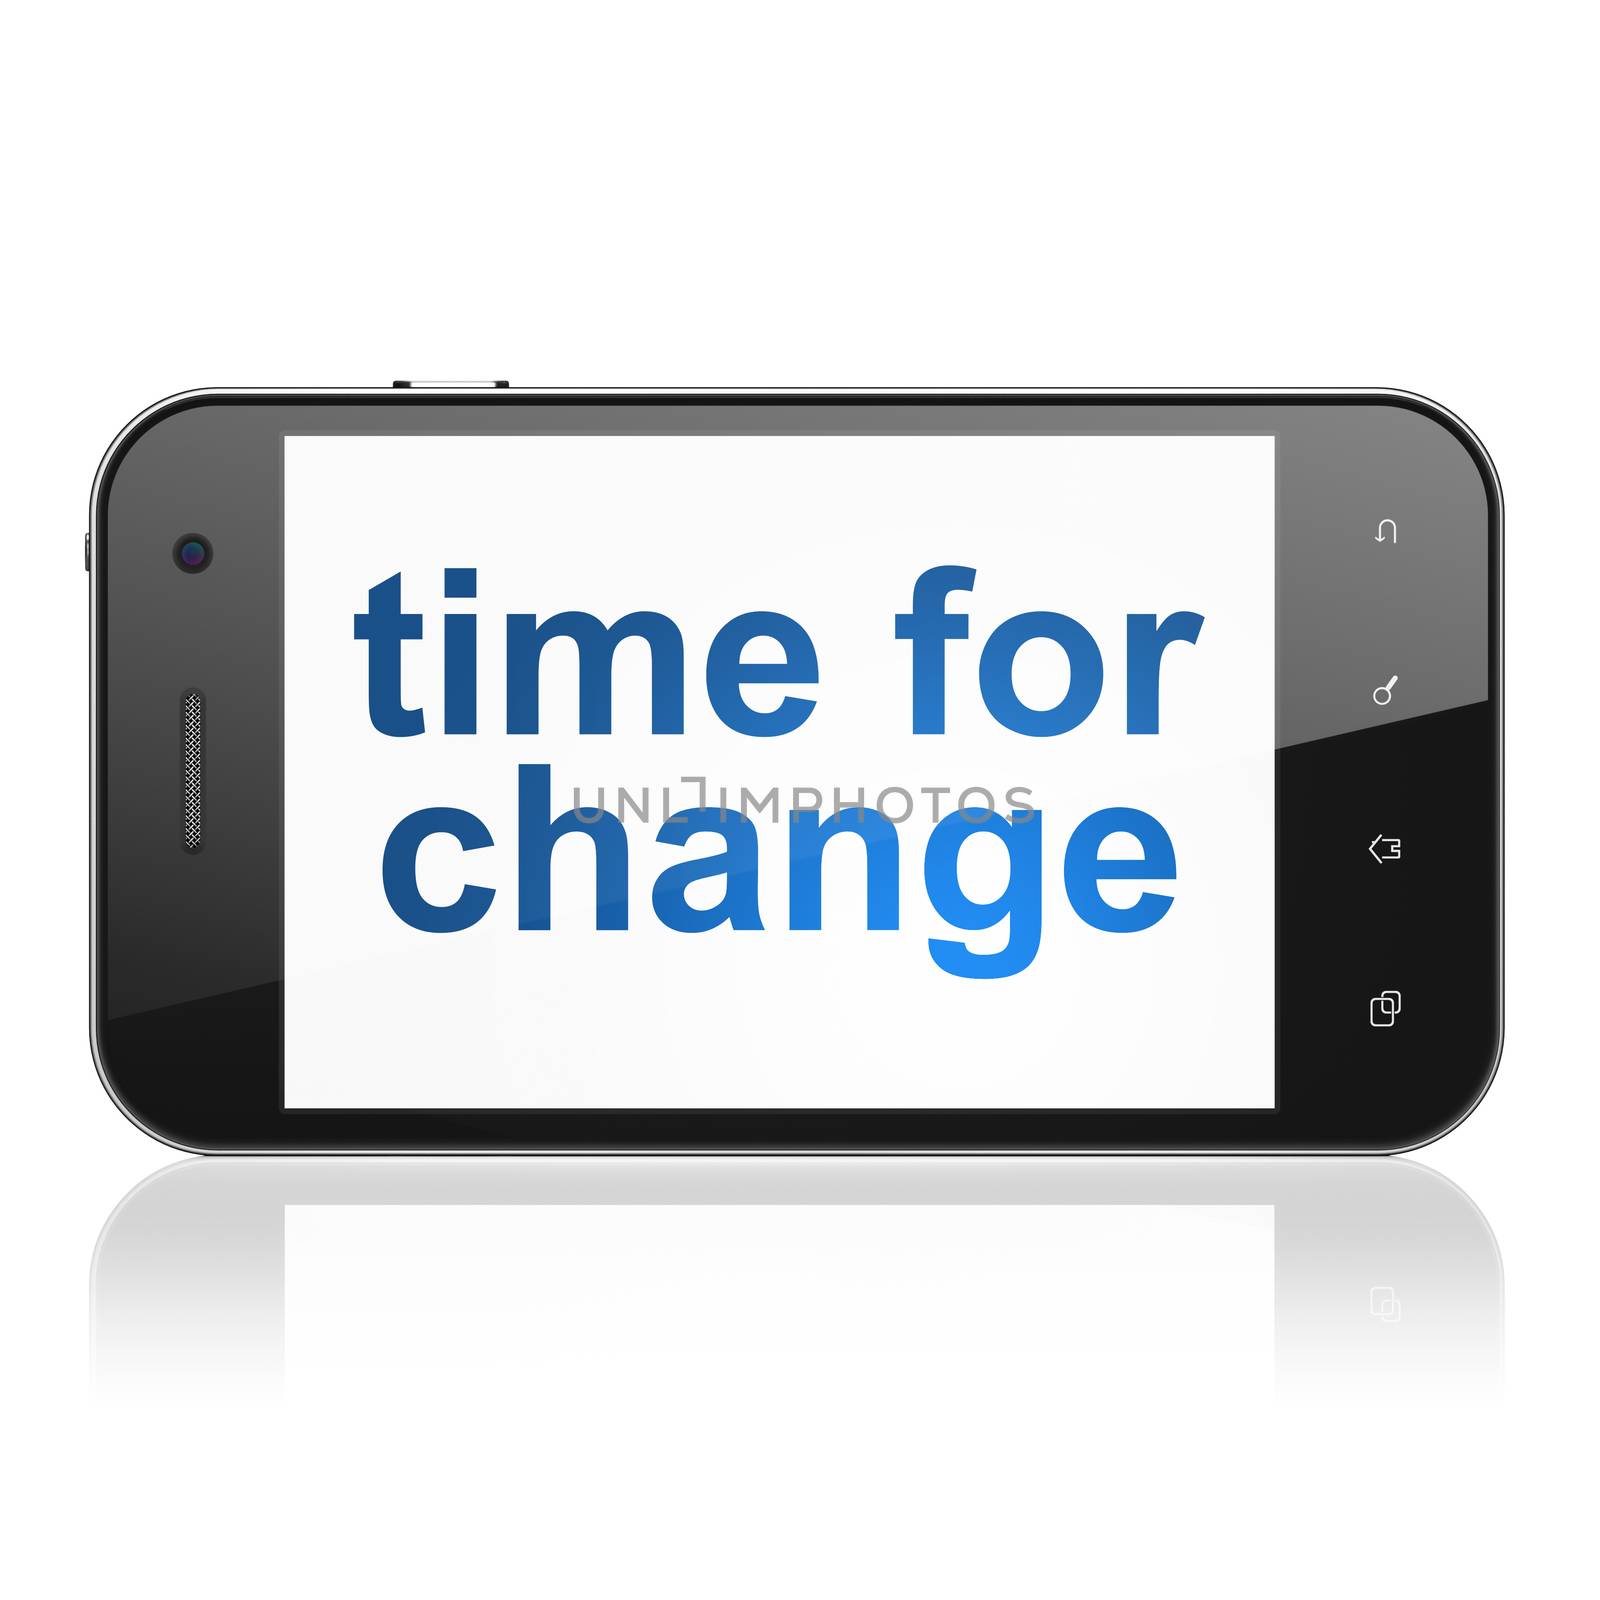 Timeline concept: Time for Change on smartphone by maxkabakov